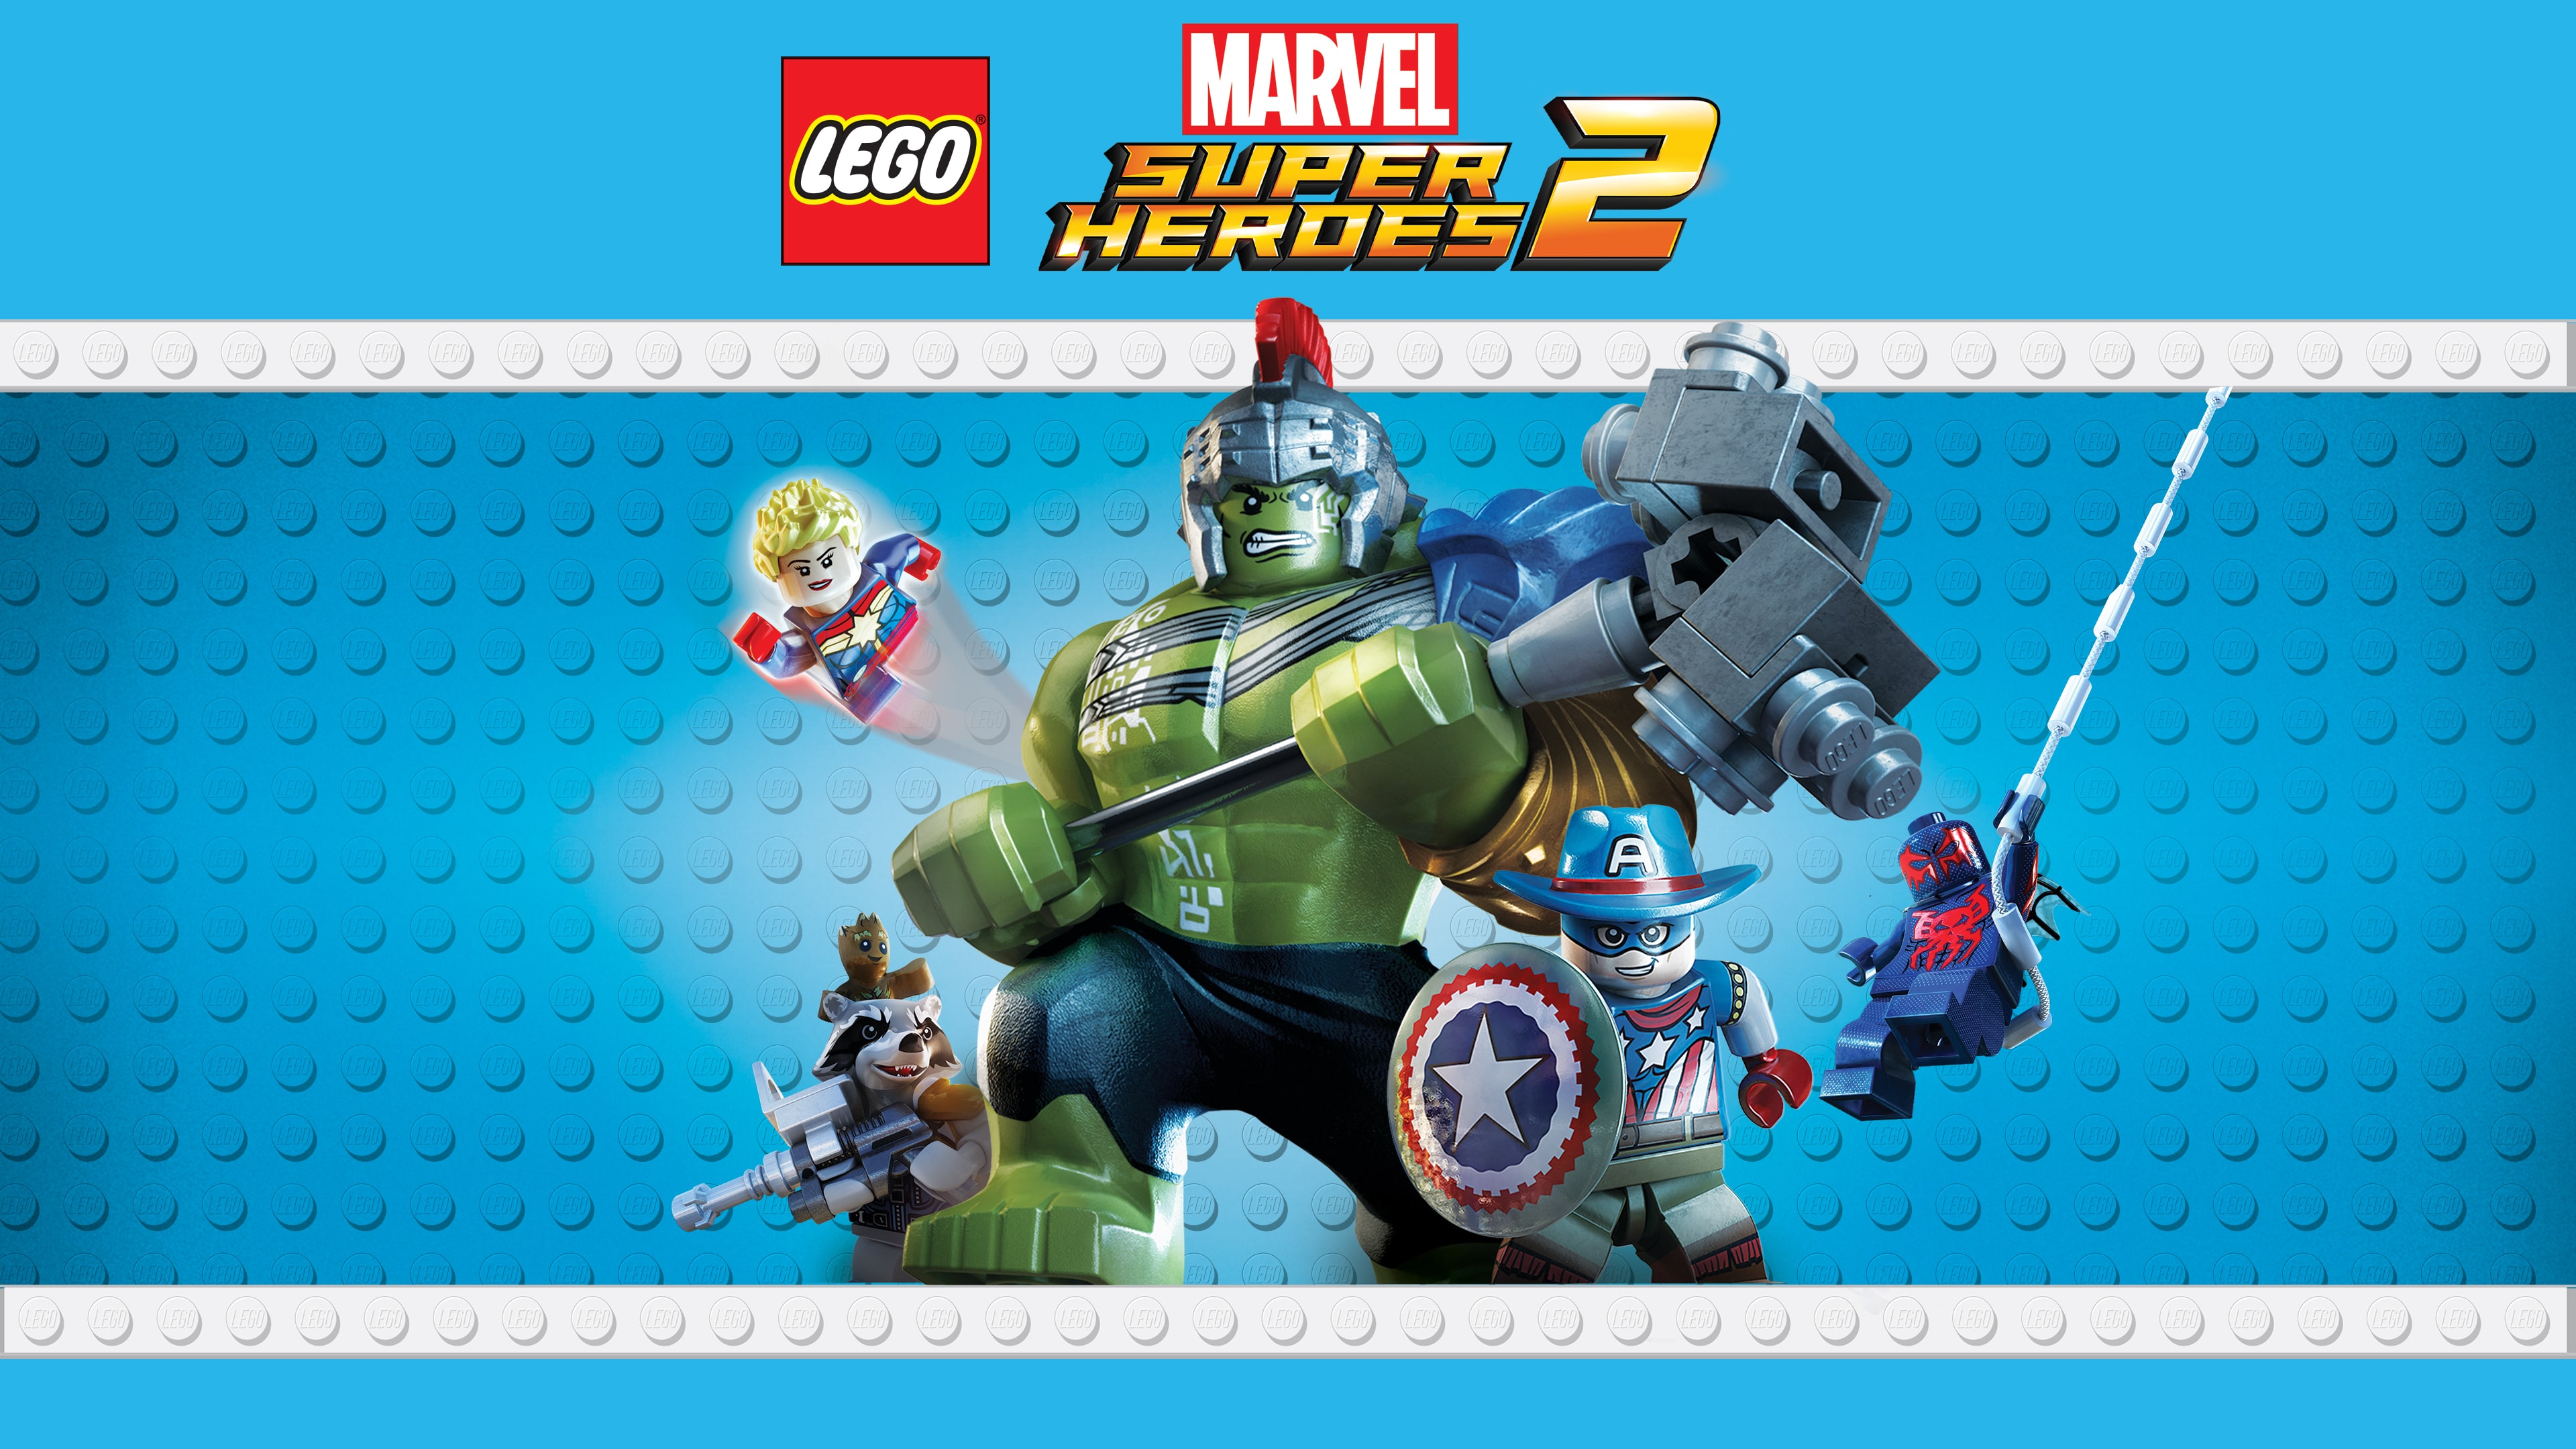 LEGO® Marvel Super Heroes 2 (English/Chinese/Korean Ver.)